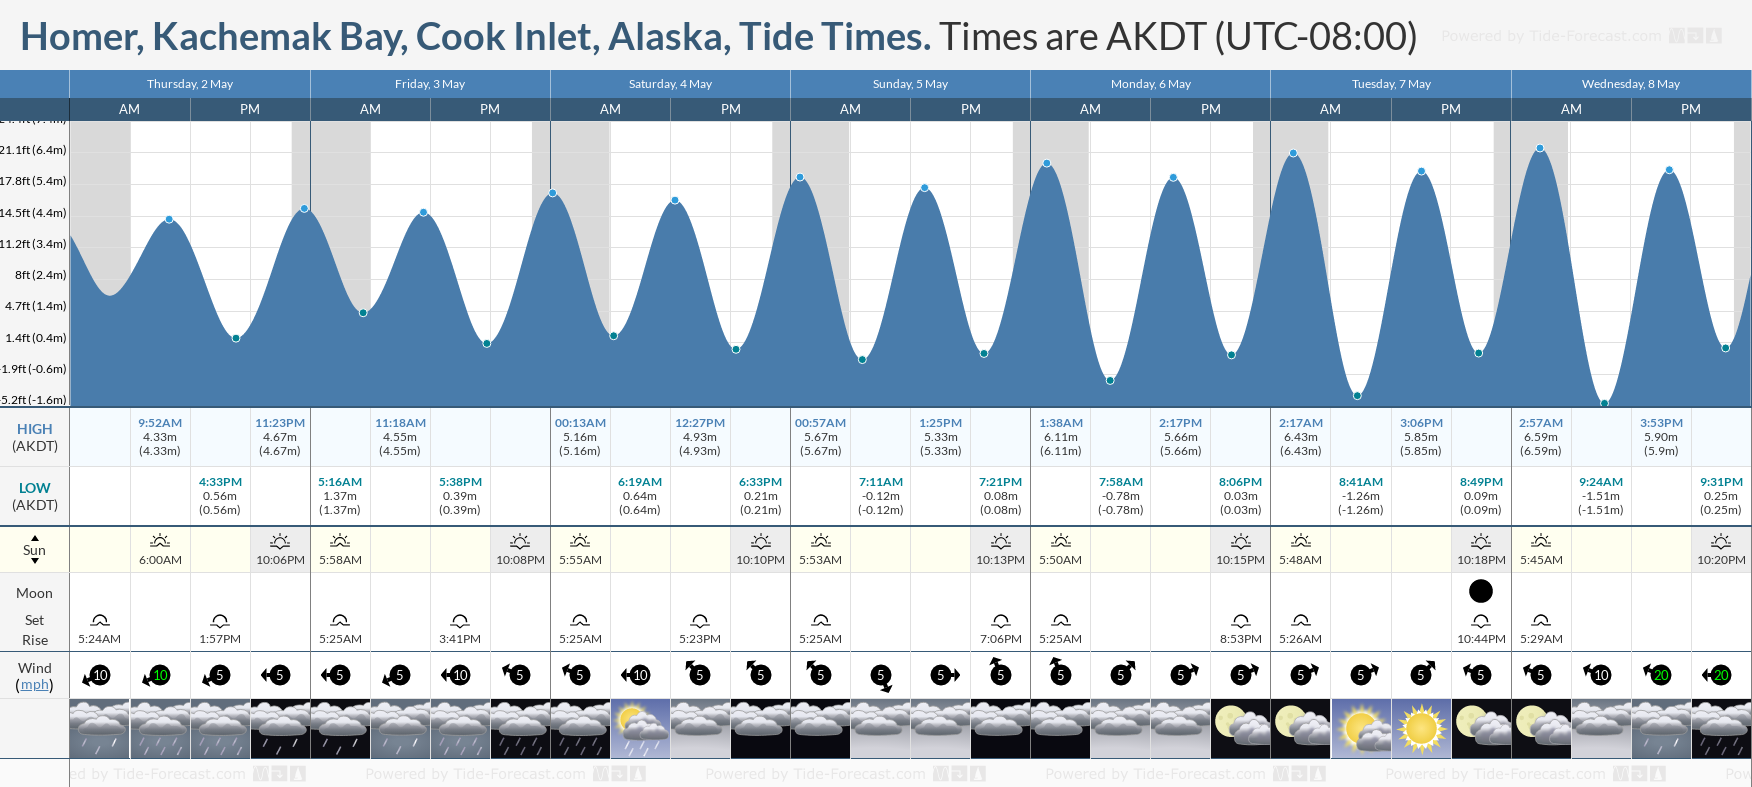 Homer, Kachemak Bay, Cook Inlet, Alaska Tide Chart including high and low tide tide times for the next 7 days